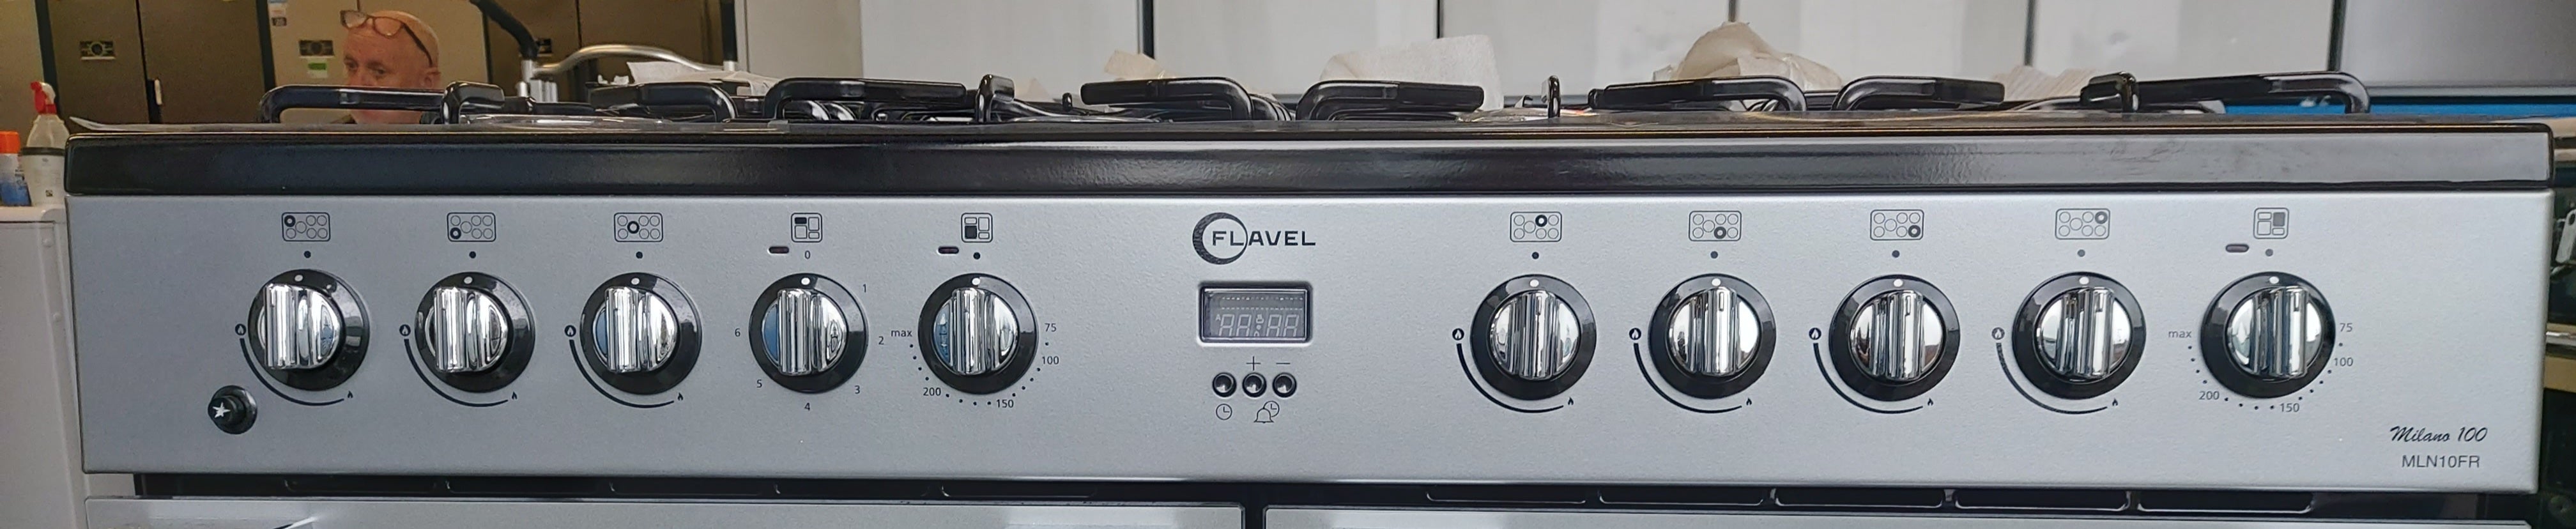 Flavel MLN10FRS 100cm Dual Fuel Range Cooker - Silver & Chrome